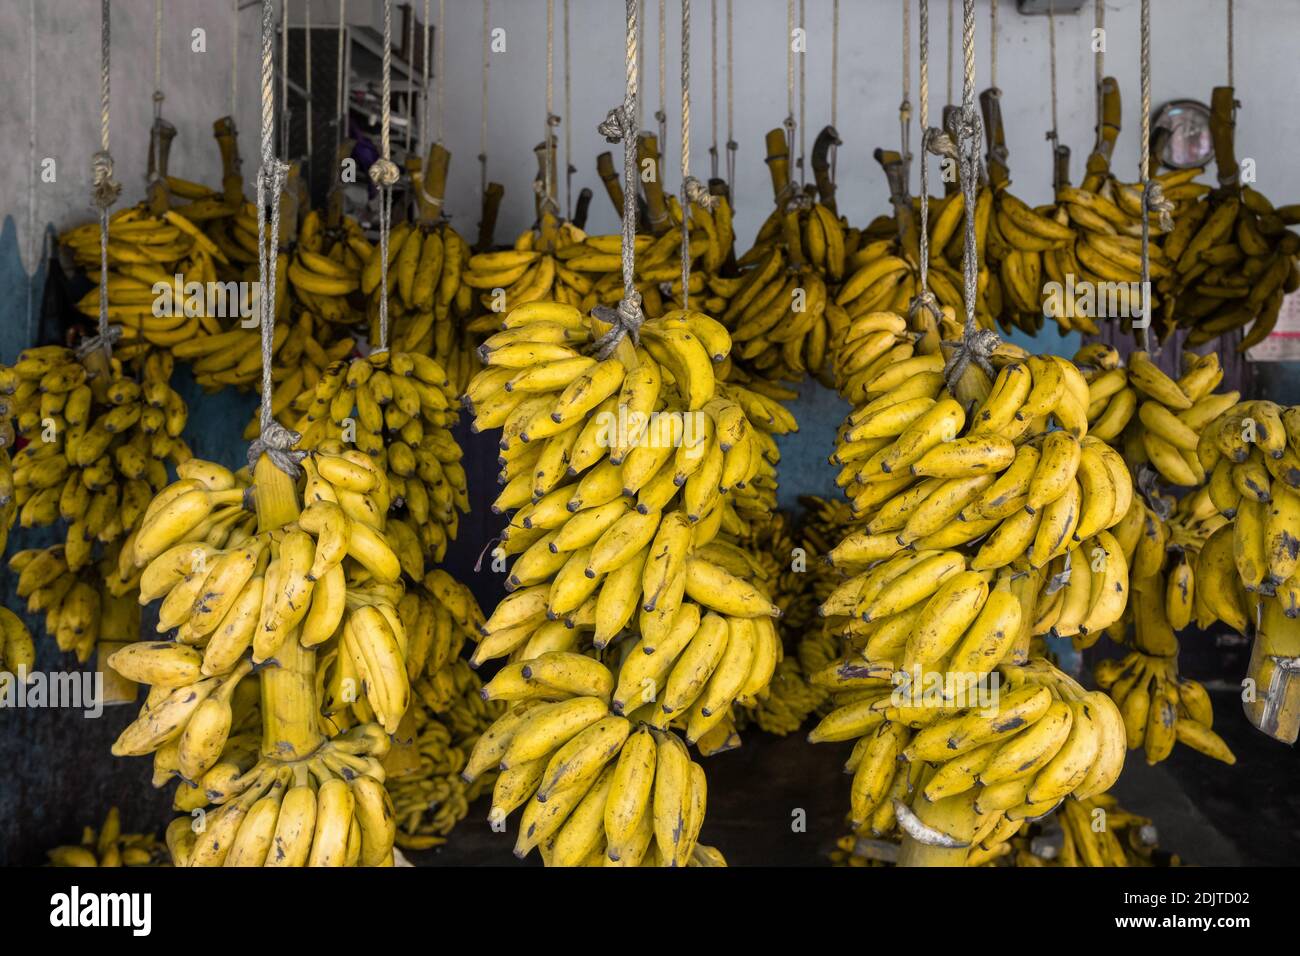 Variety of bananas in banana shop in Kerala, India Stock Photo